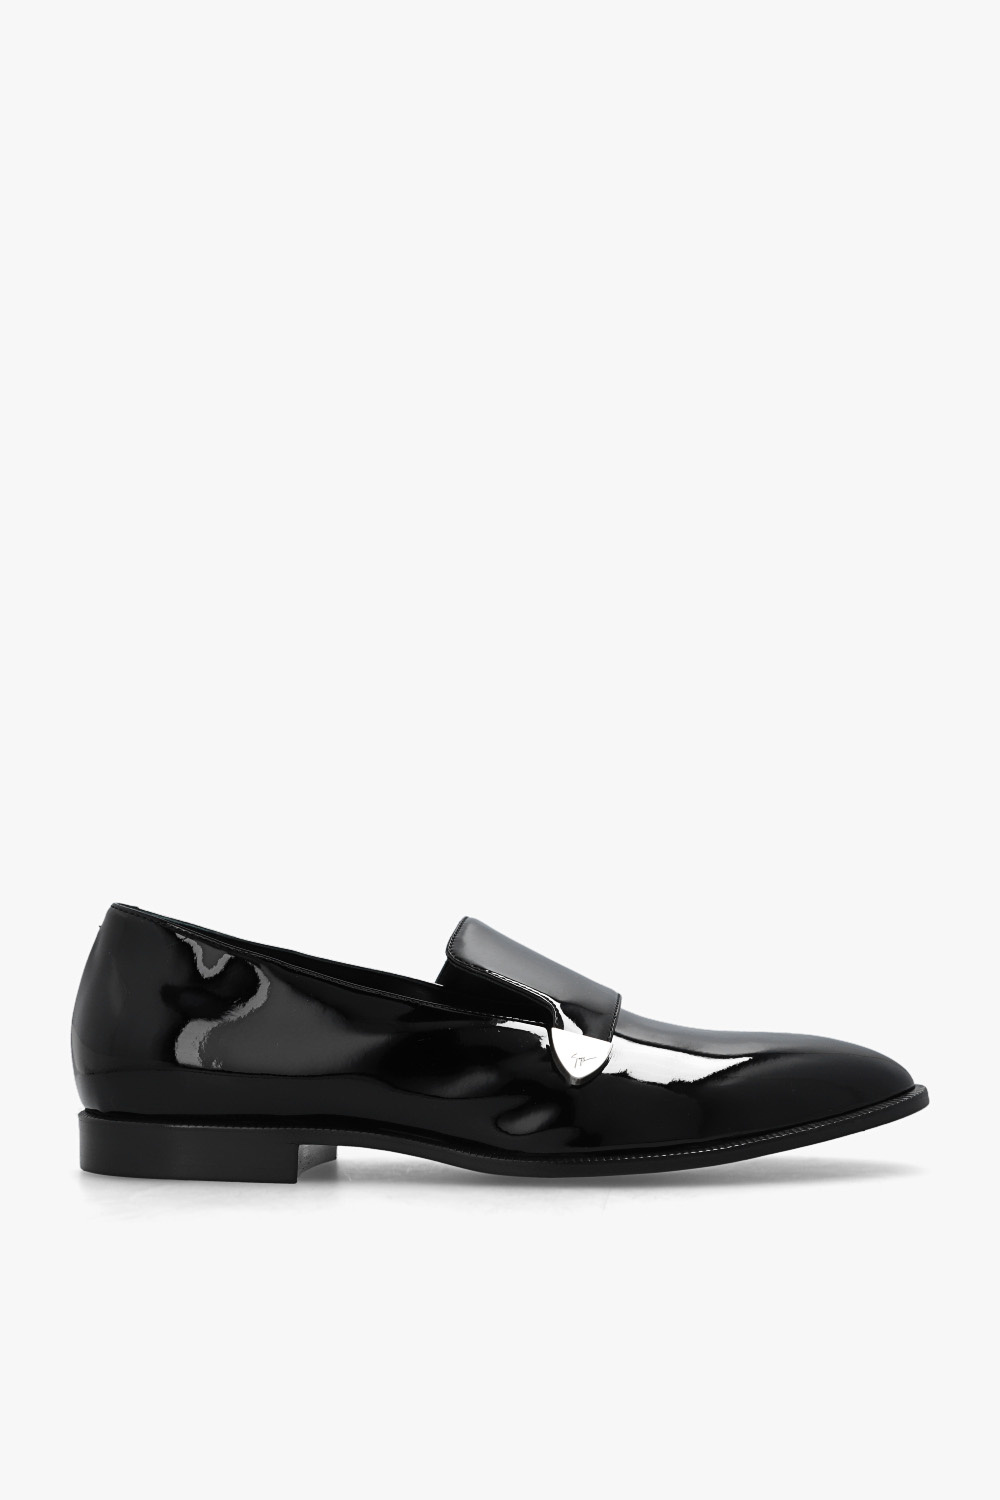 Giuseppe Zanotti ‘Flavio’ shoes